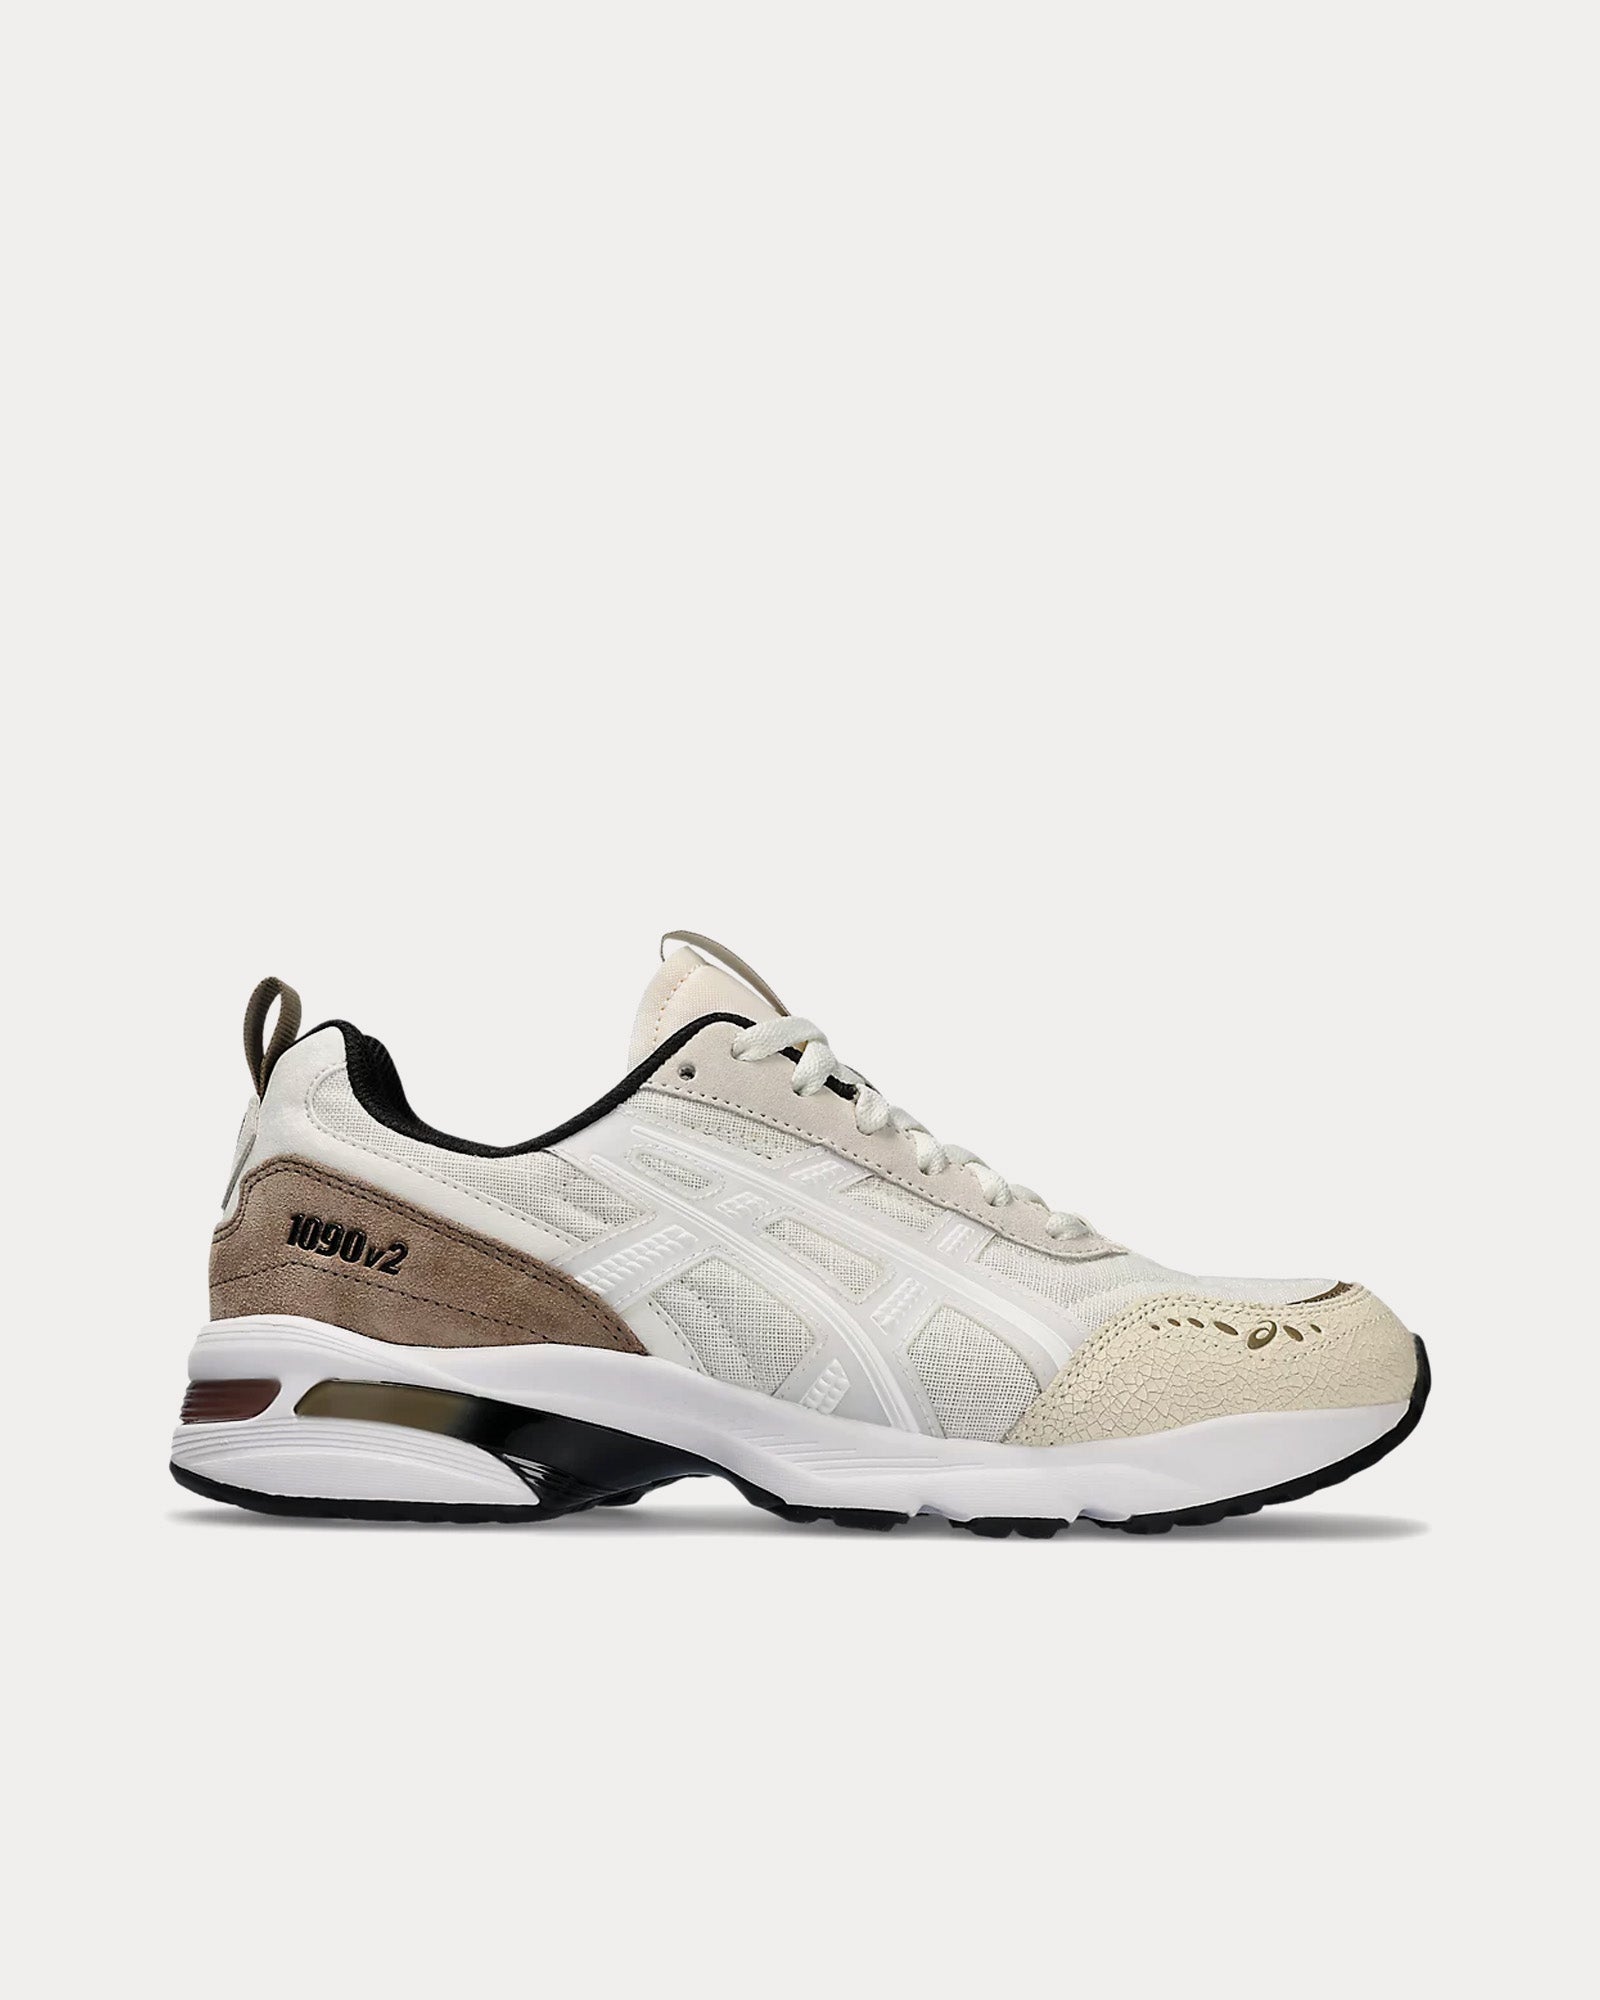 Asics - Gel-1090v2 Cream / White Low Top Sneakers